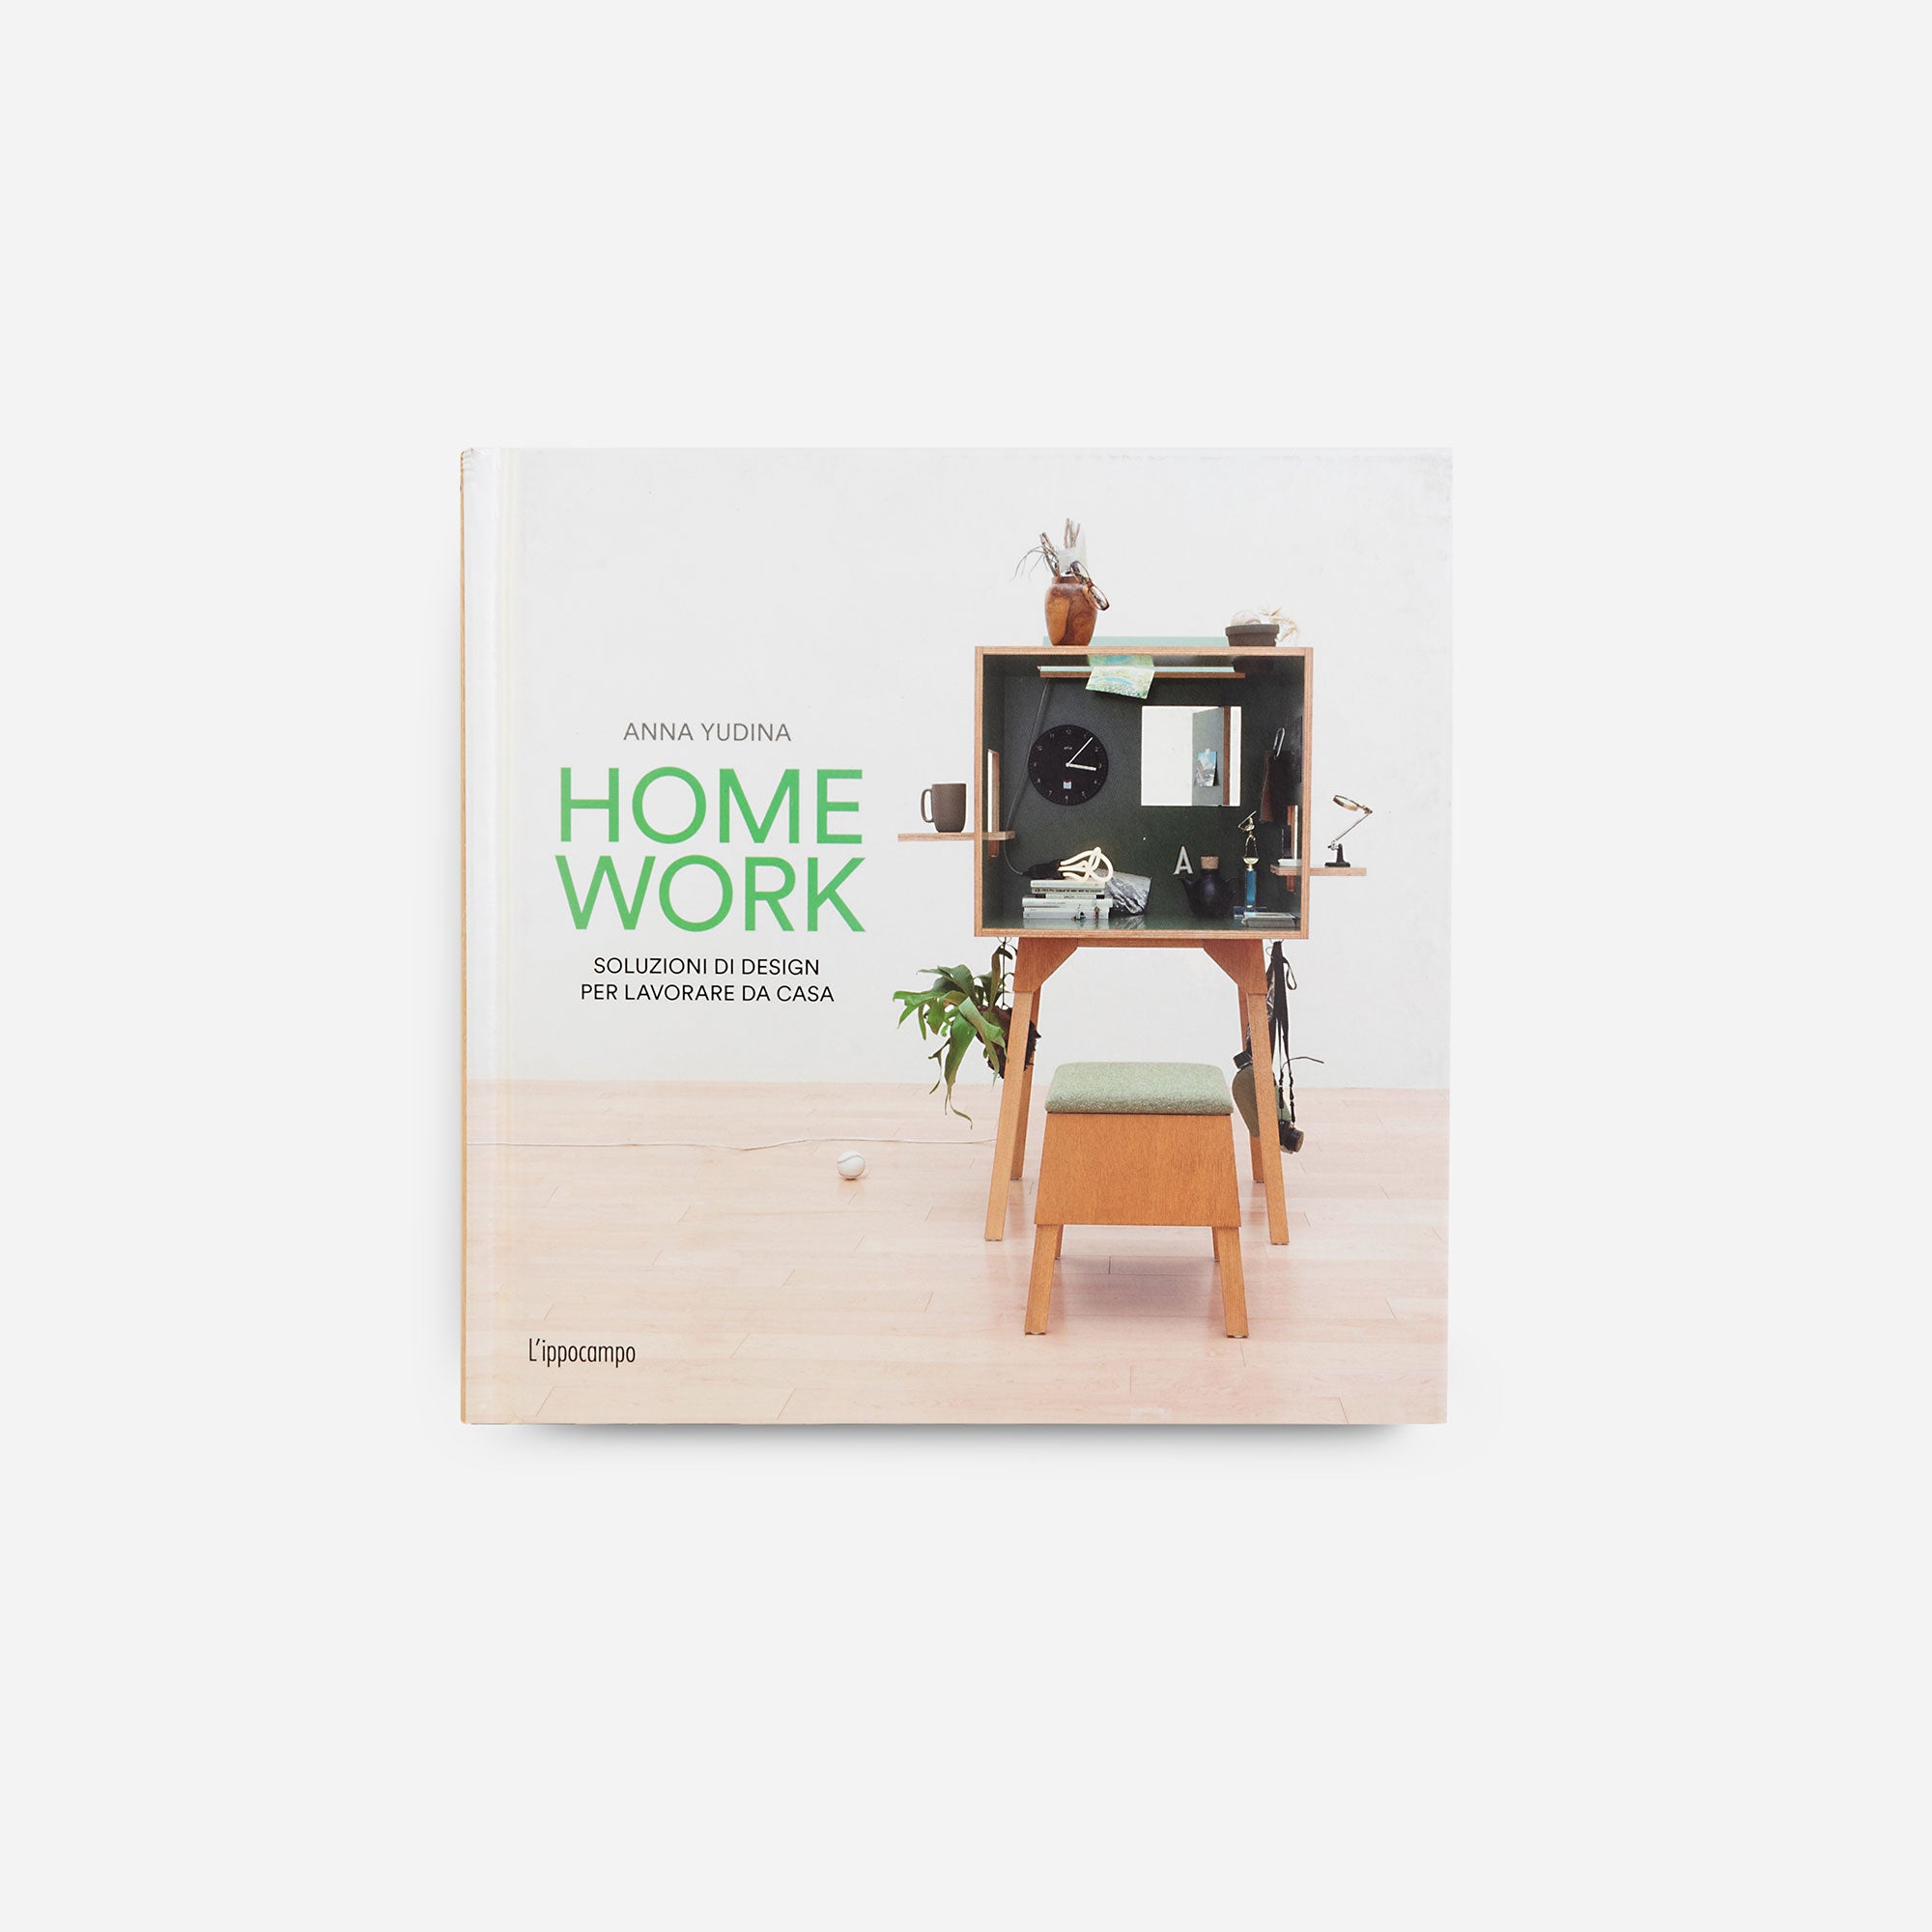 Homework - Soluzioni di design per lavorare da casa